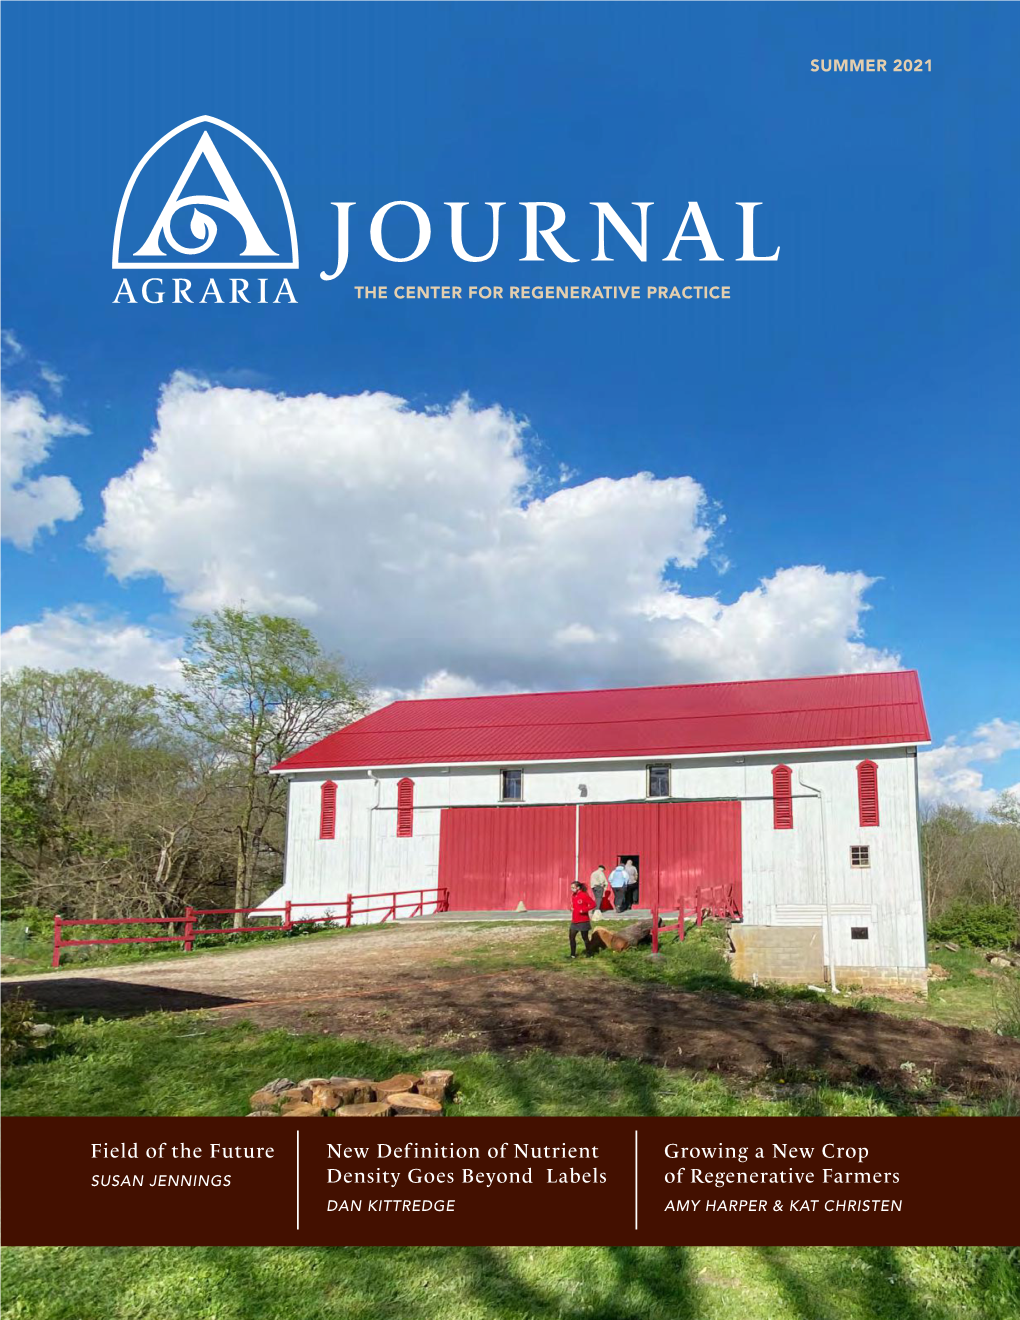 Journal the Center for Regenerative Practice